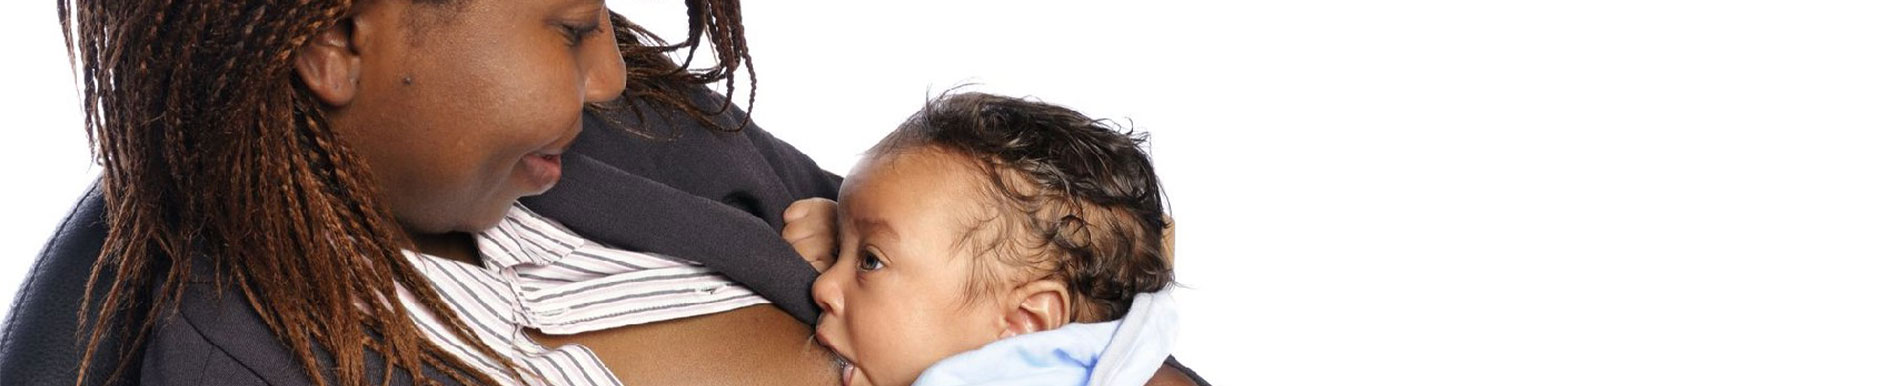 https://www.healthychildren.org/SiteCollectionImage-Homepage-Banners/breastfeeding-banner.jpg